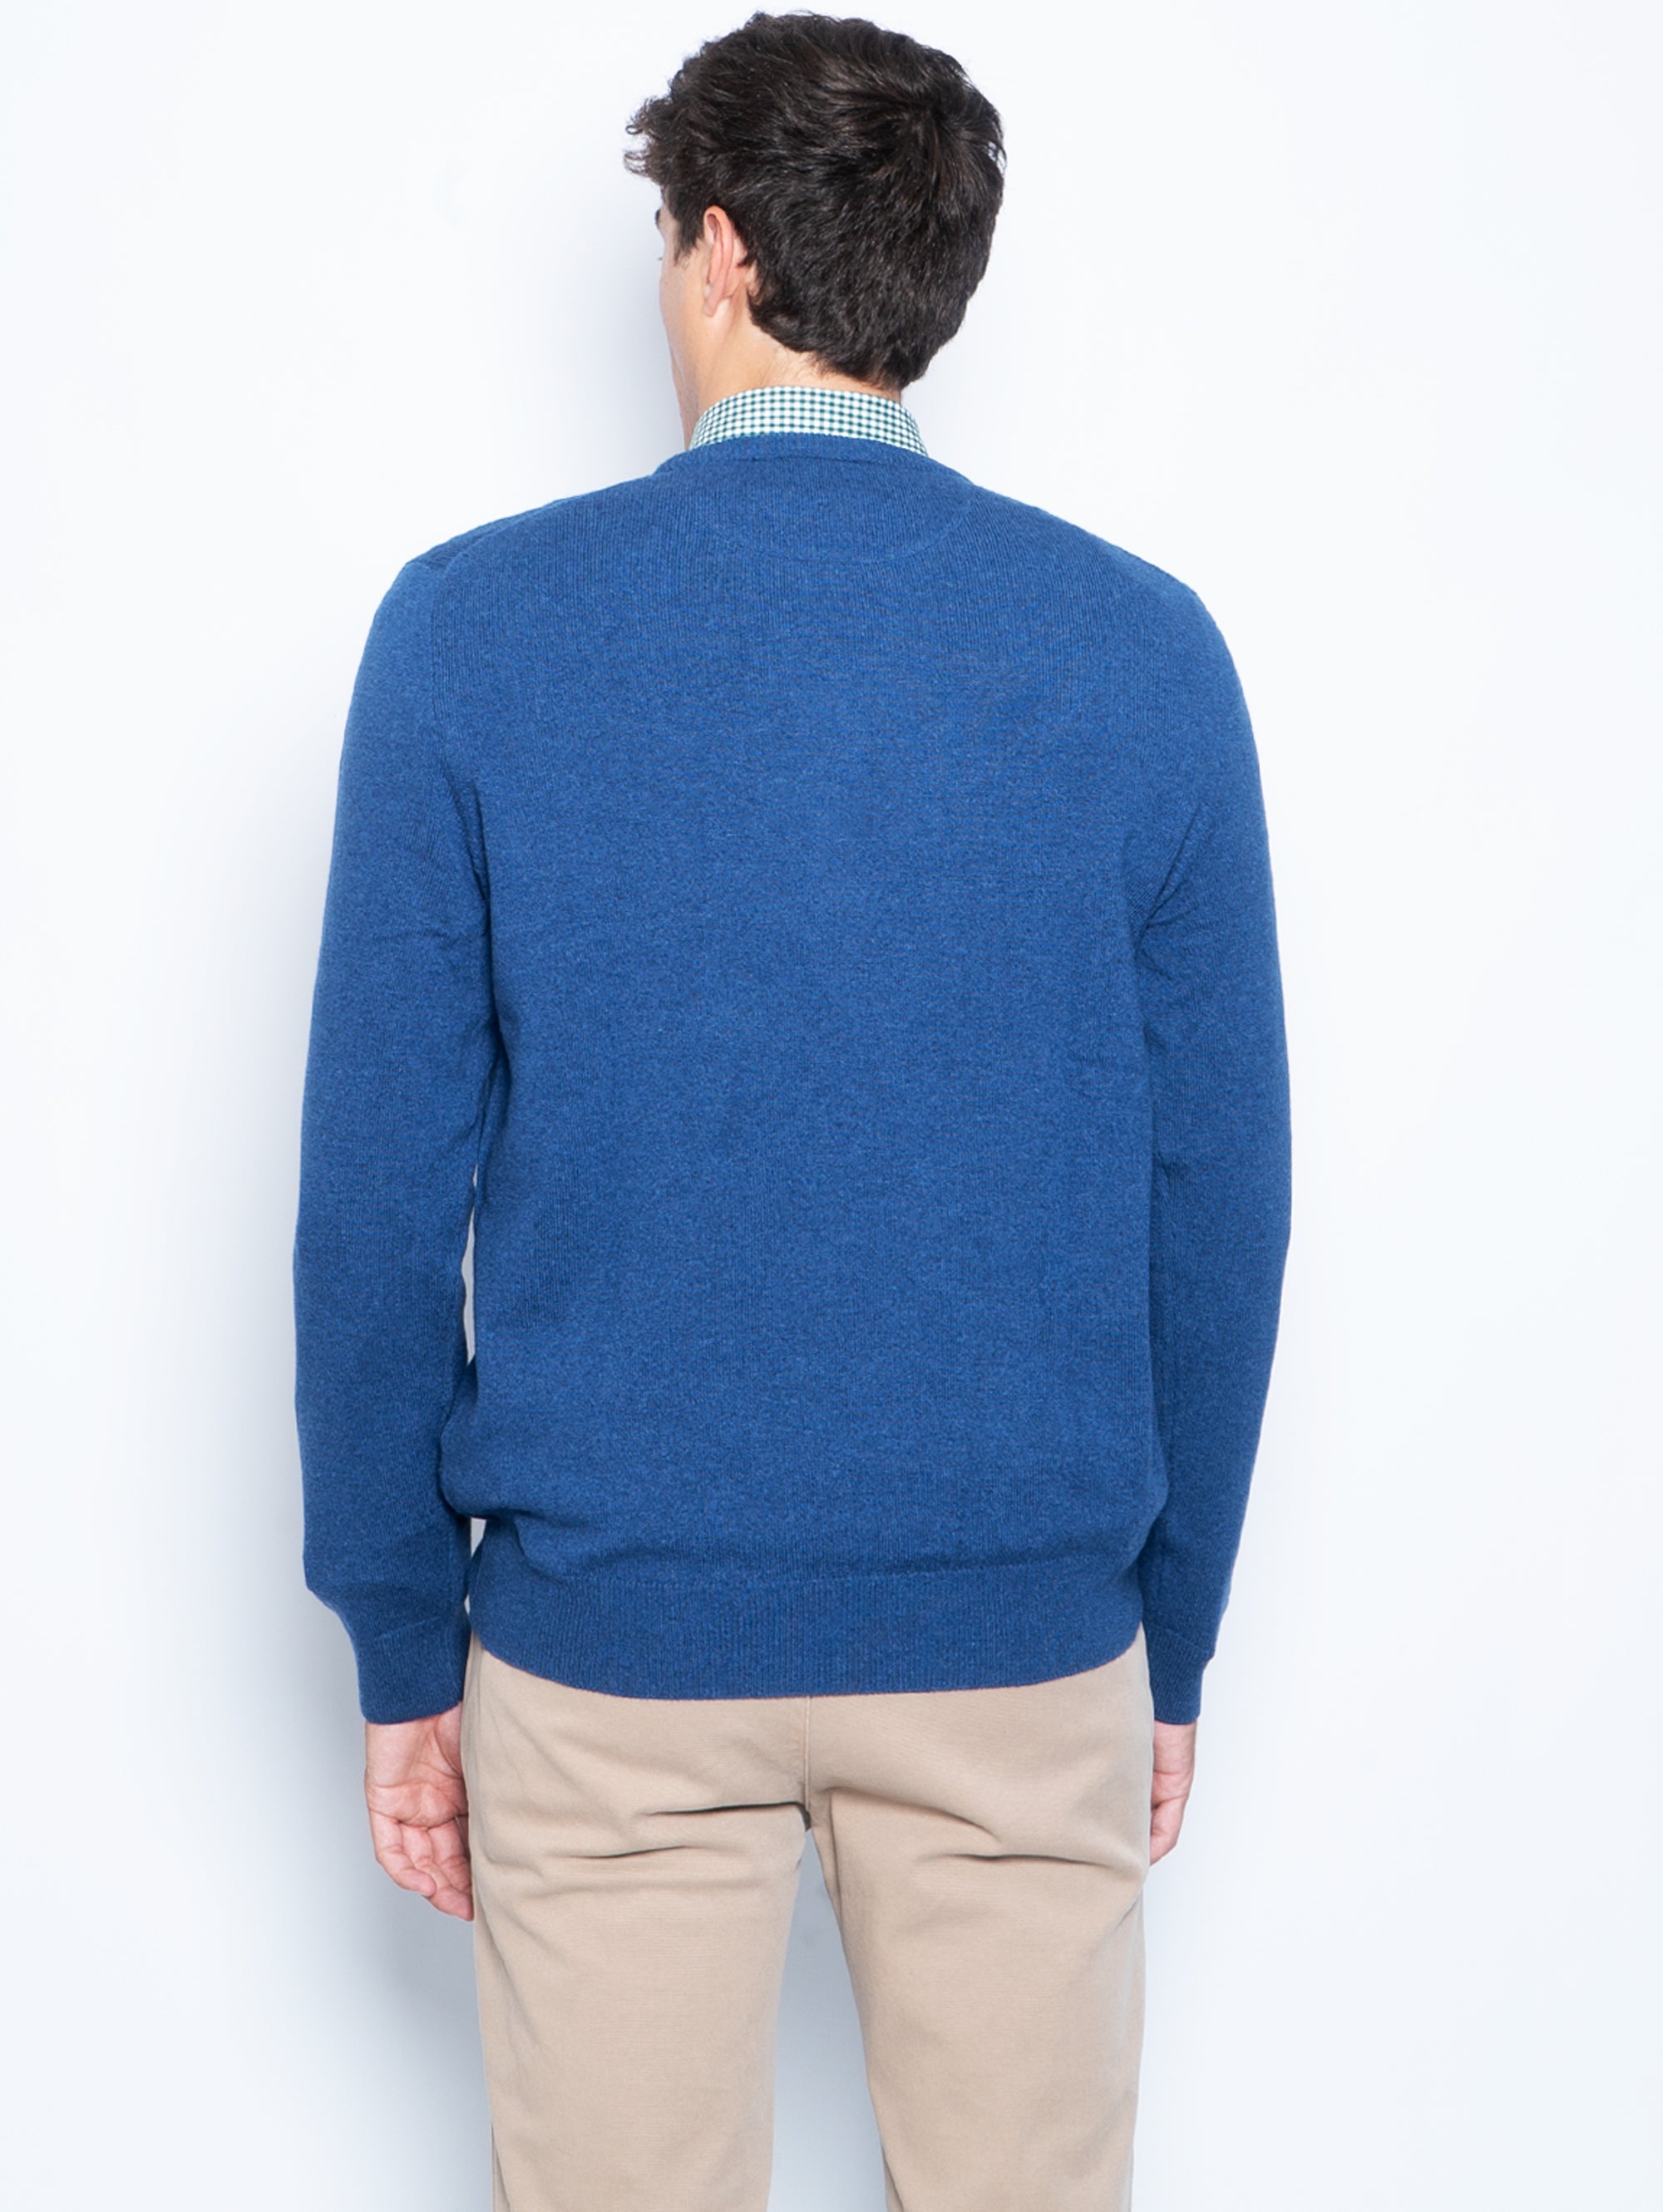 Crewneck sweater in light blue wool